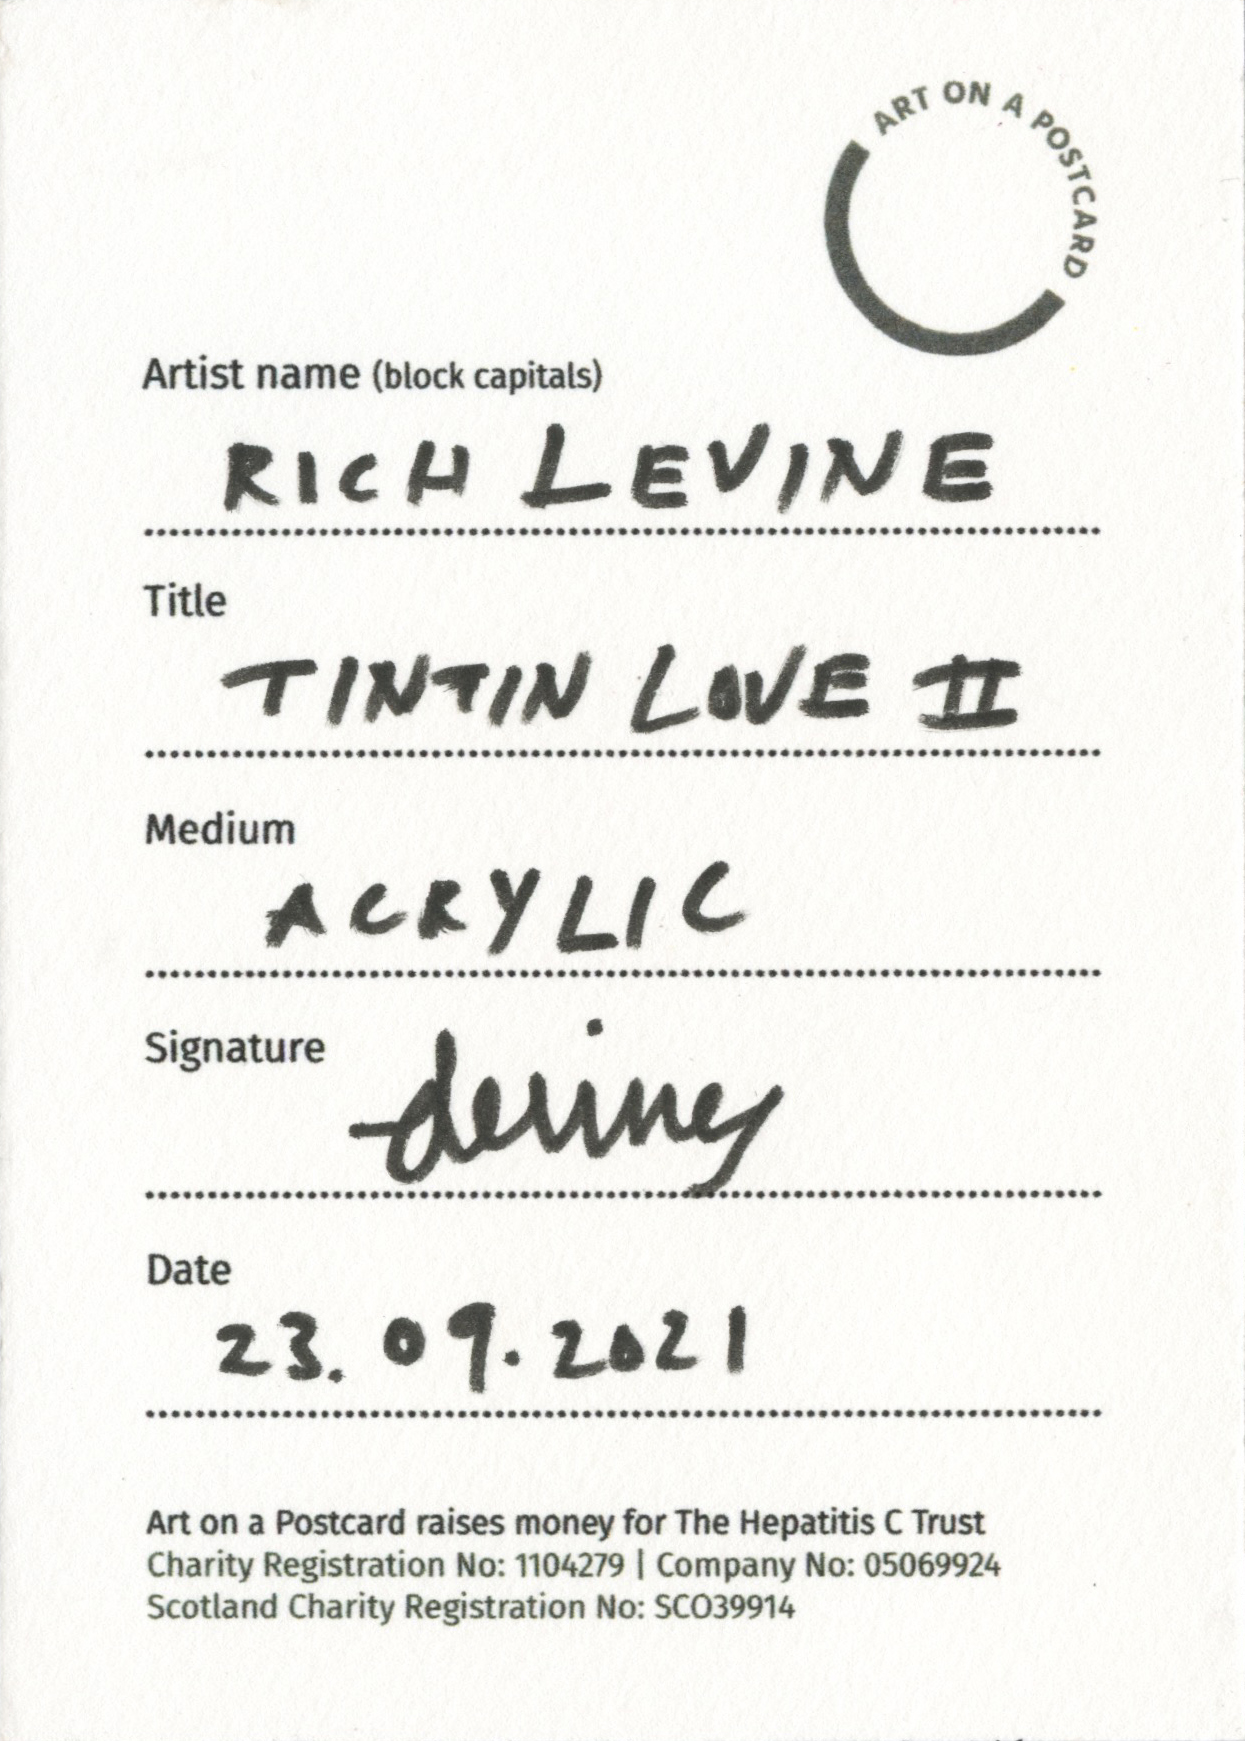 TINTIN LOVE II - back